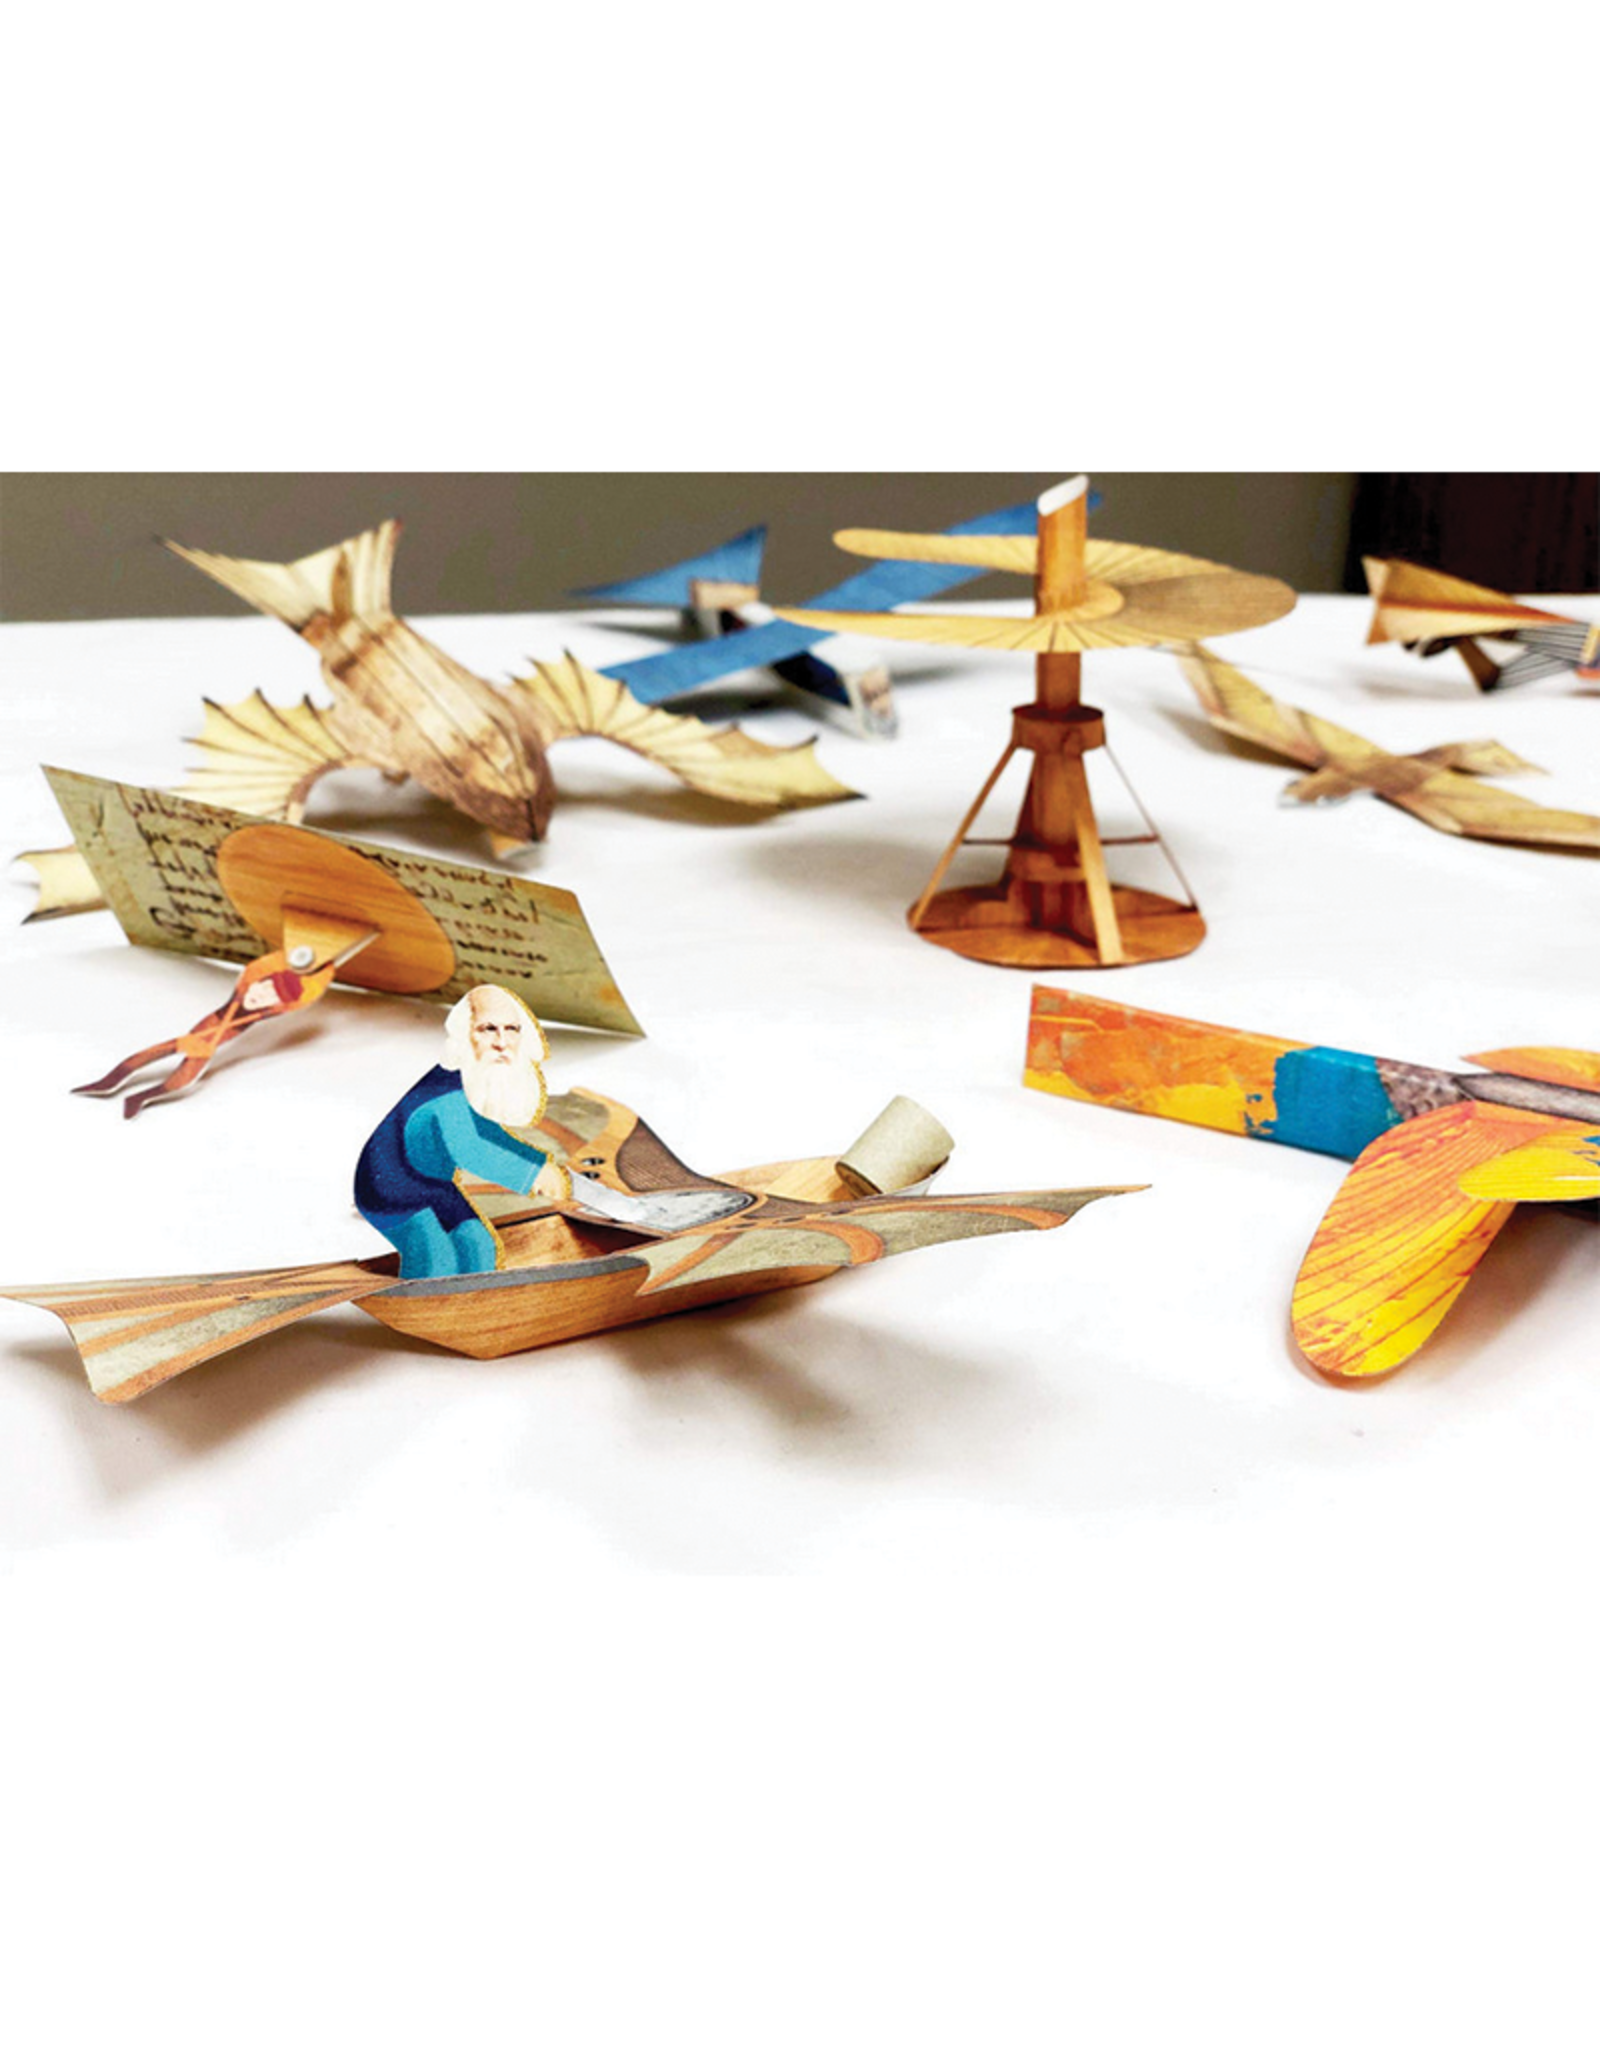 Leonardo da Vinci's Flying Machines Kit